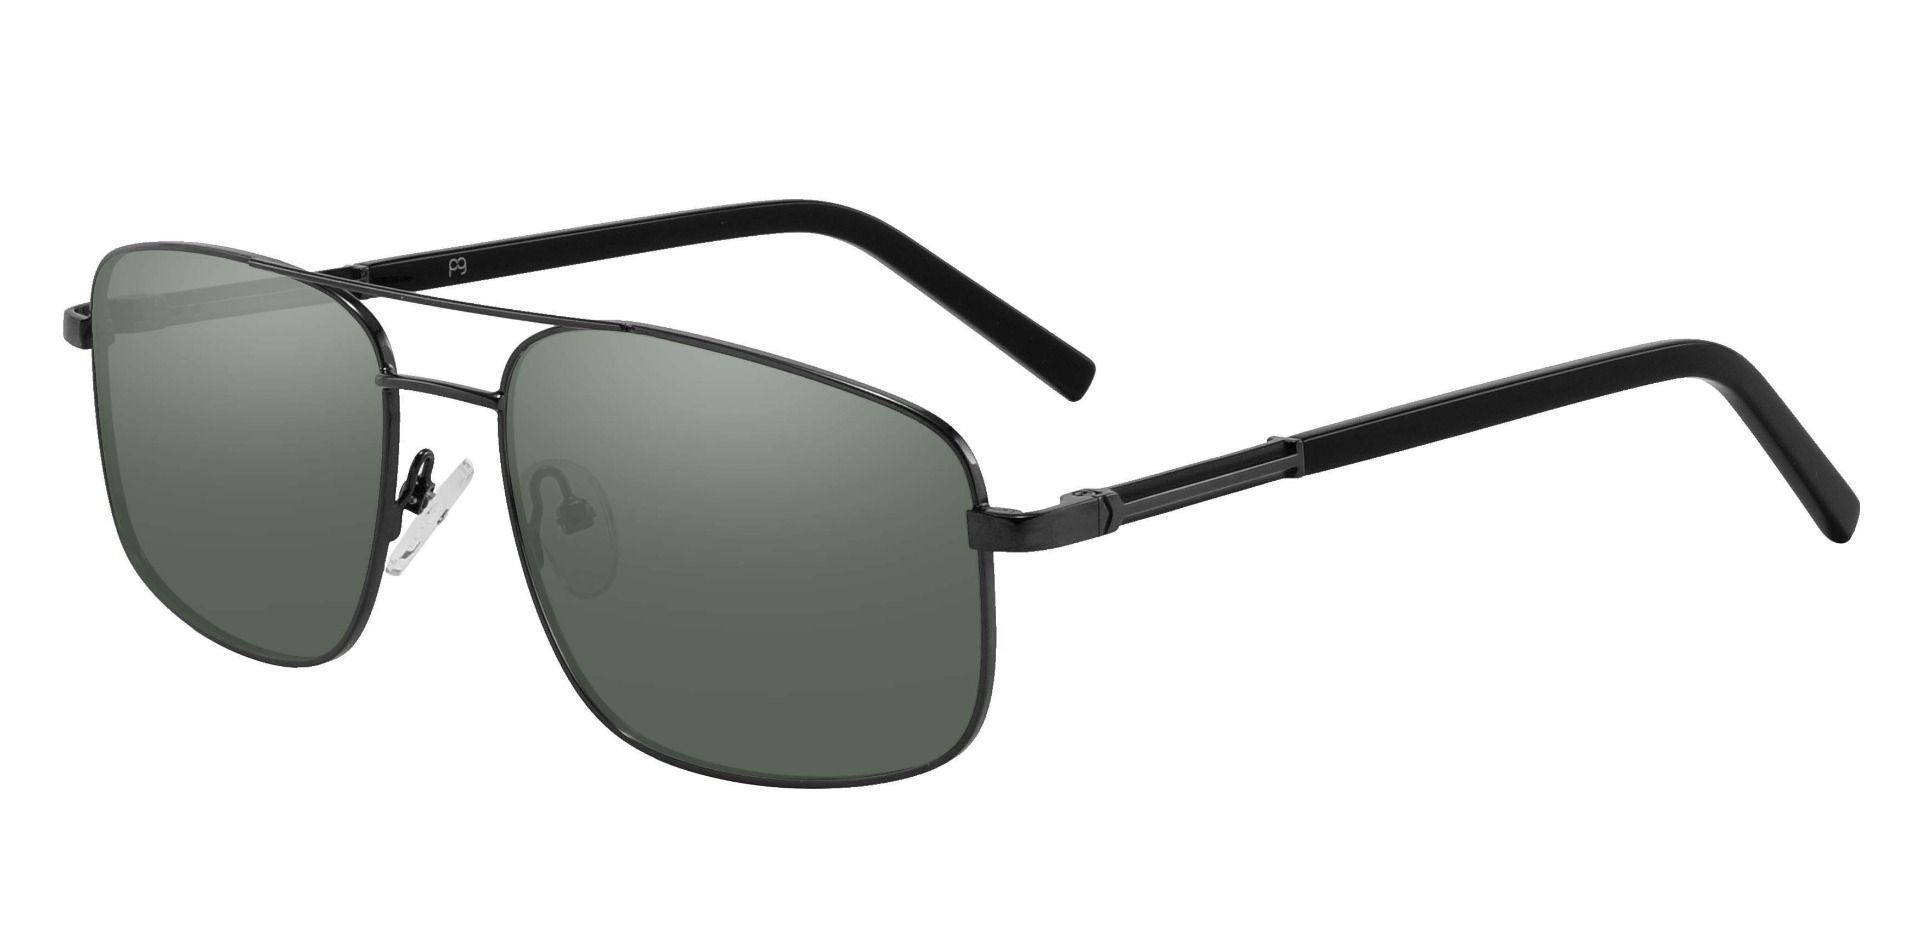 Davenport Aviator Prescription Sunglasses - Black Frame With Green Lenses